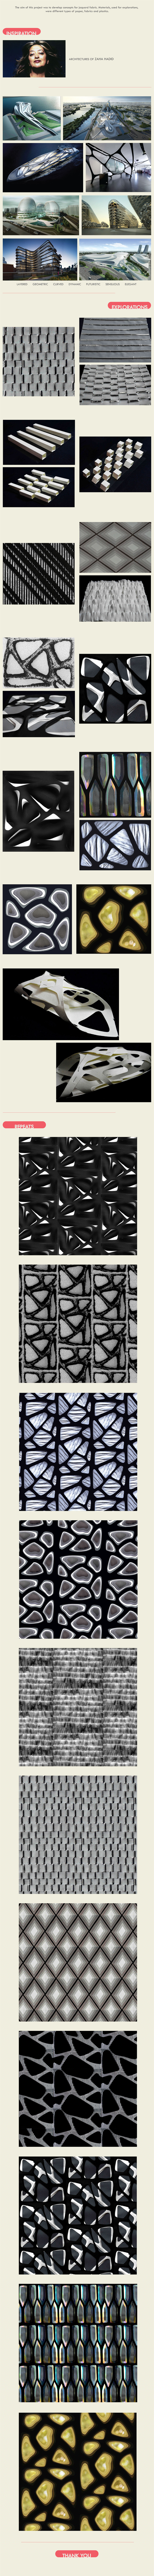 paper fabrics plastics ZAHA HADID architectures jacquard